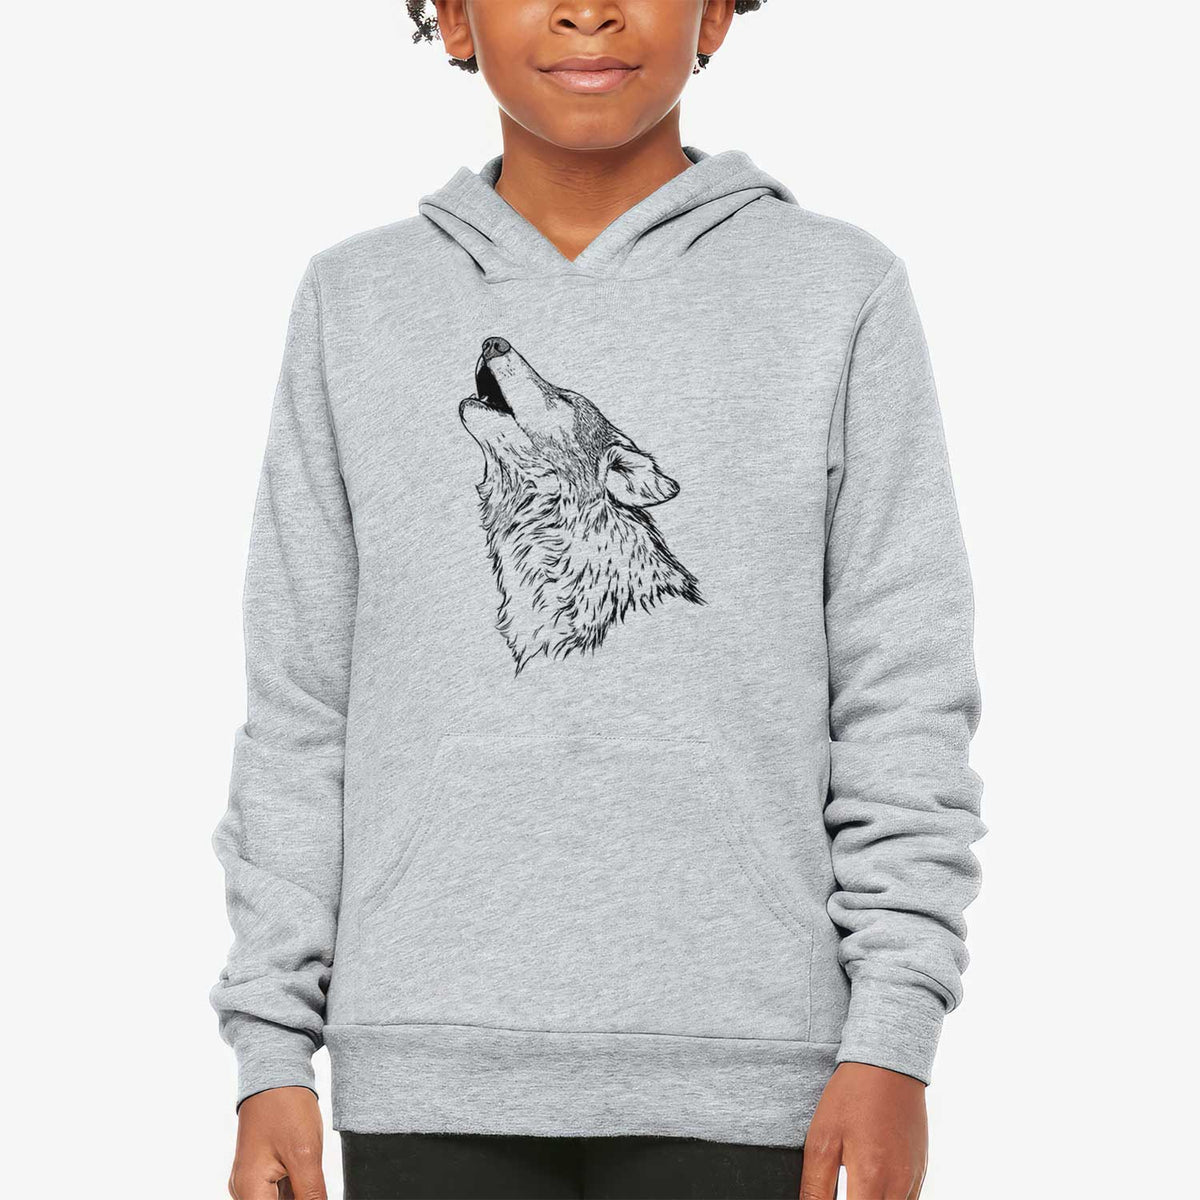 Canis lupus - Grey Wolf Howling - Youth Hoodie Sweatshirt